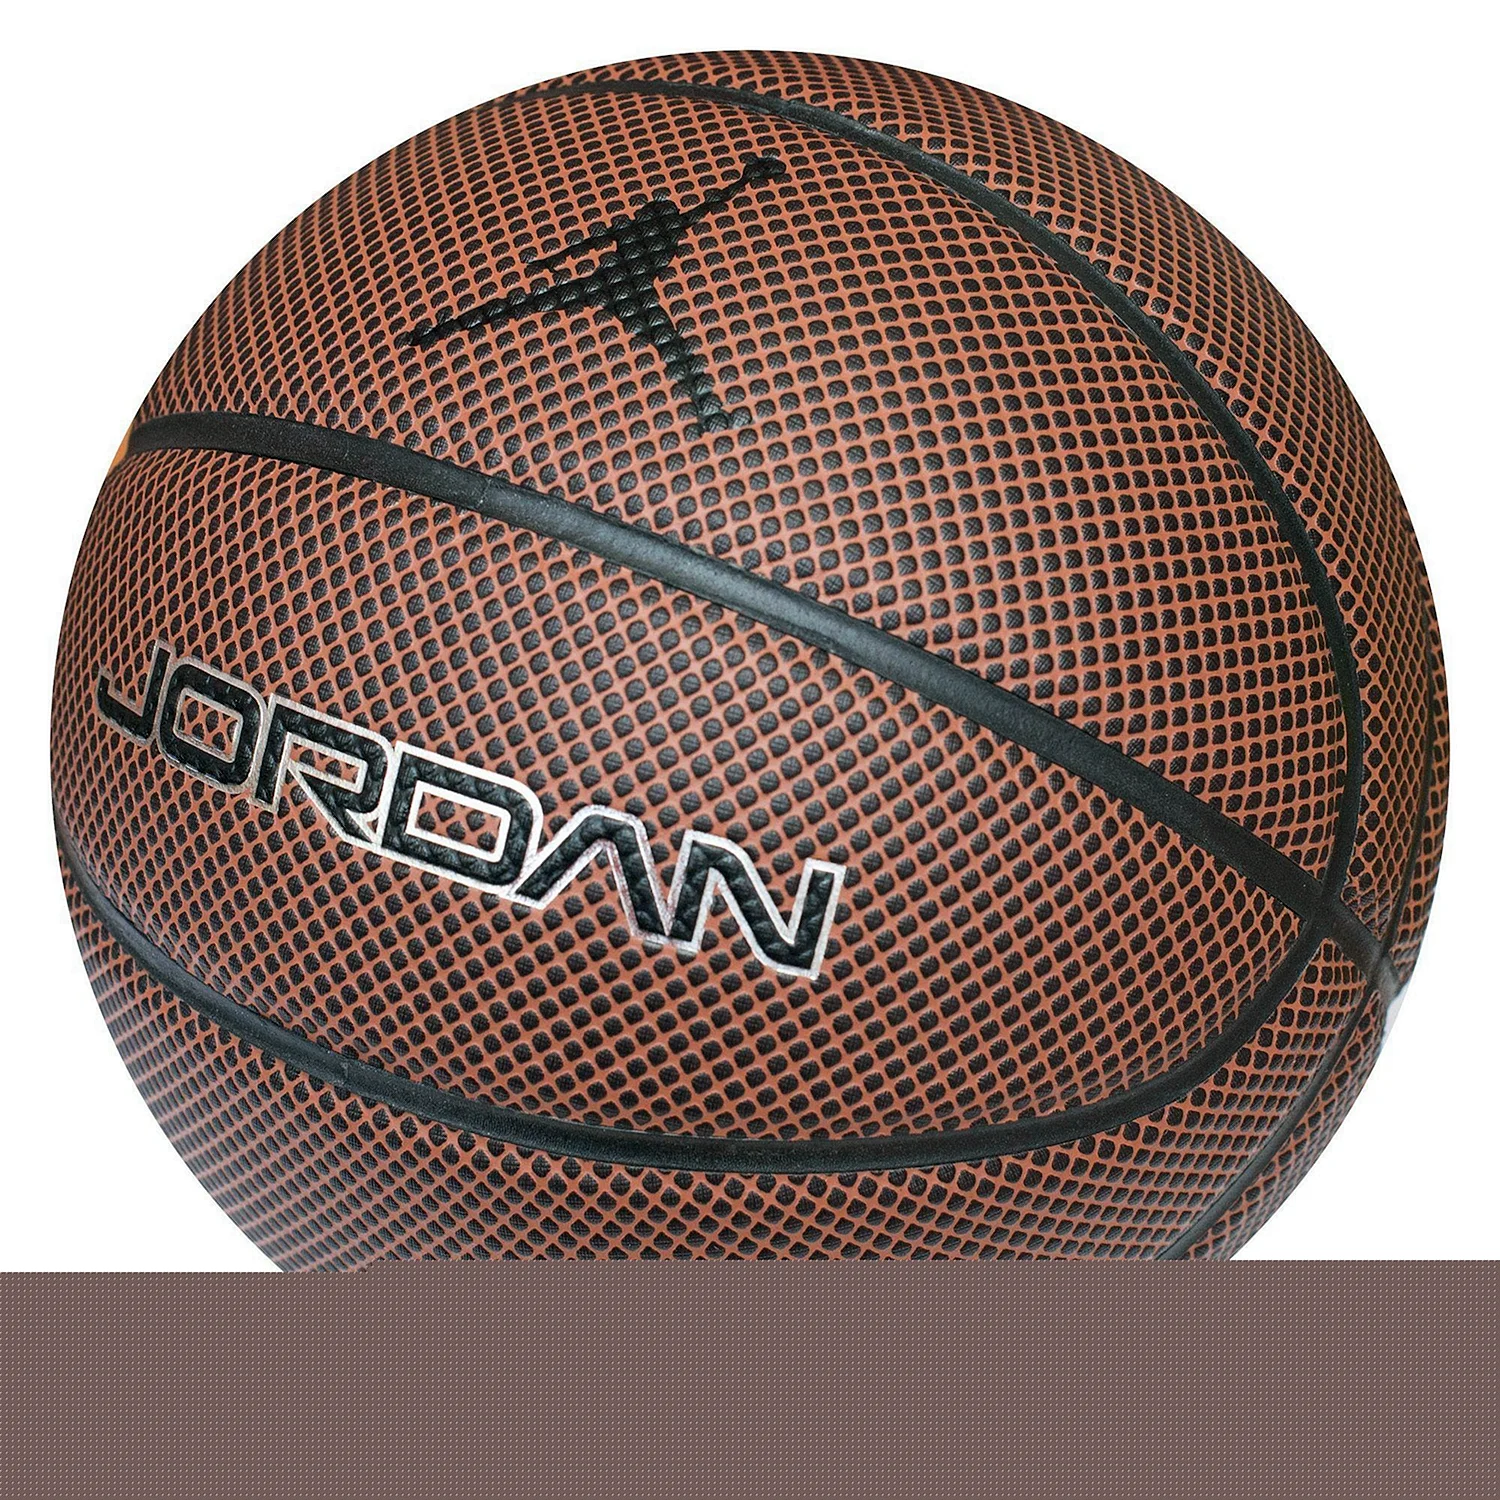 Баскетбольный мяч Спортмастер